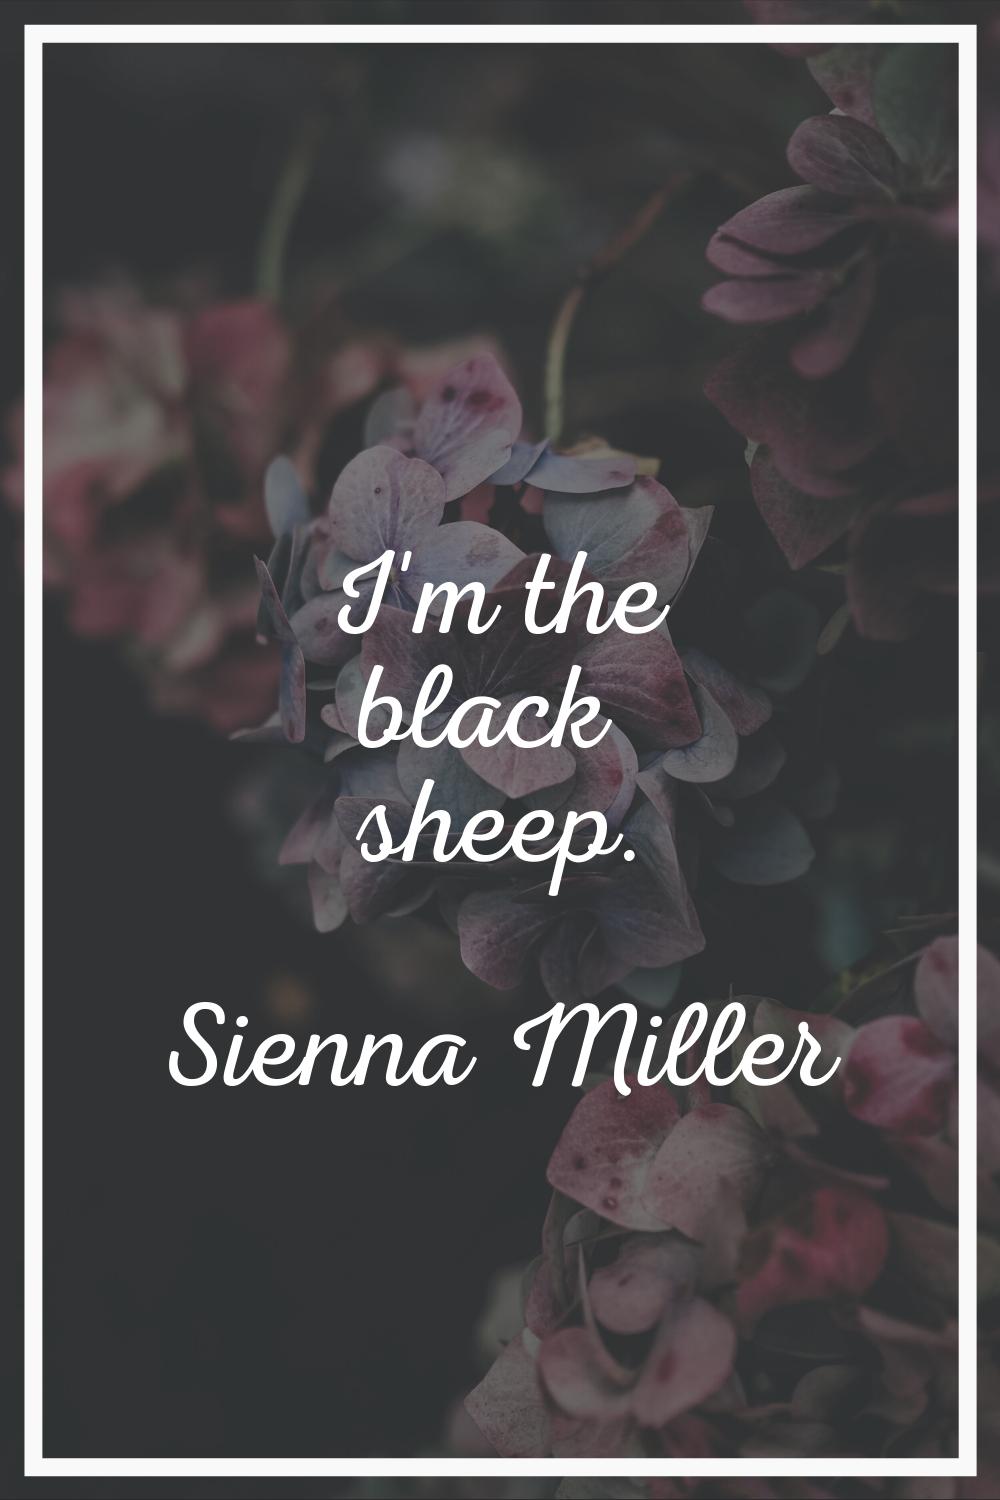 I'm the black sheep.